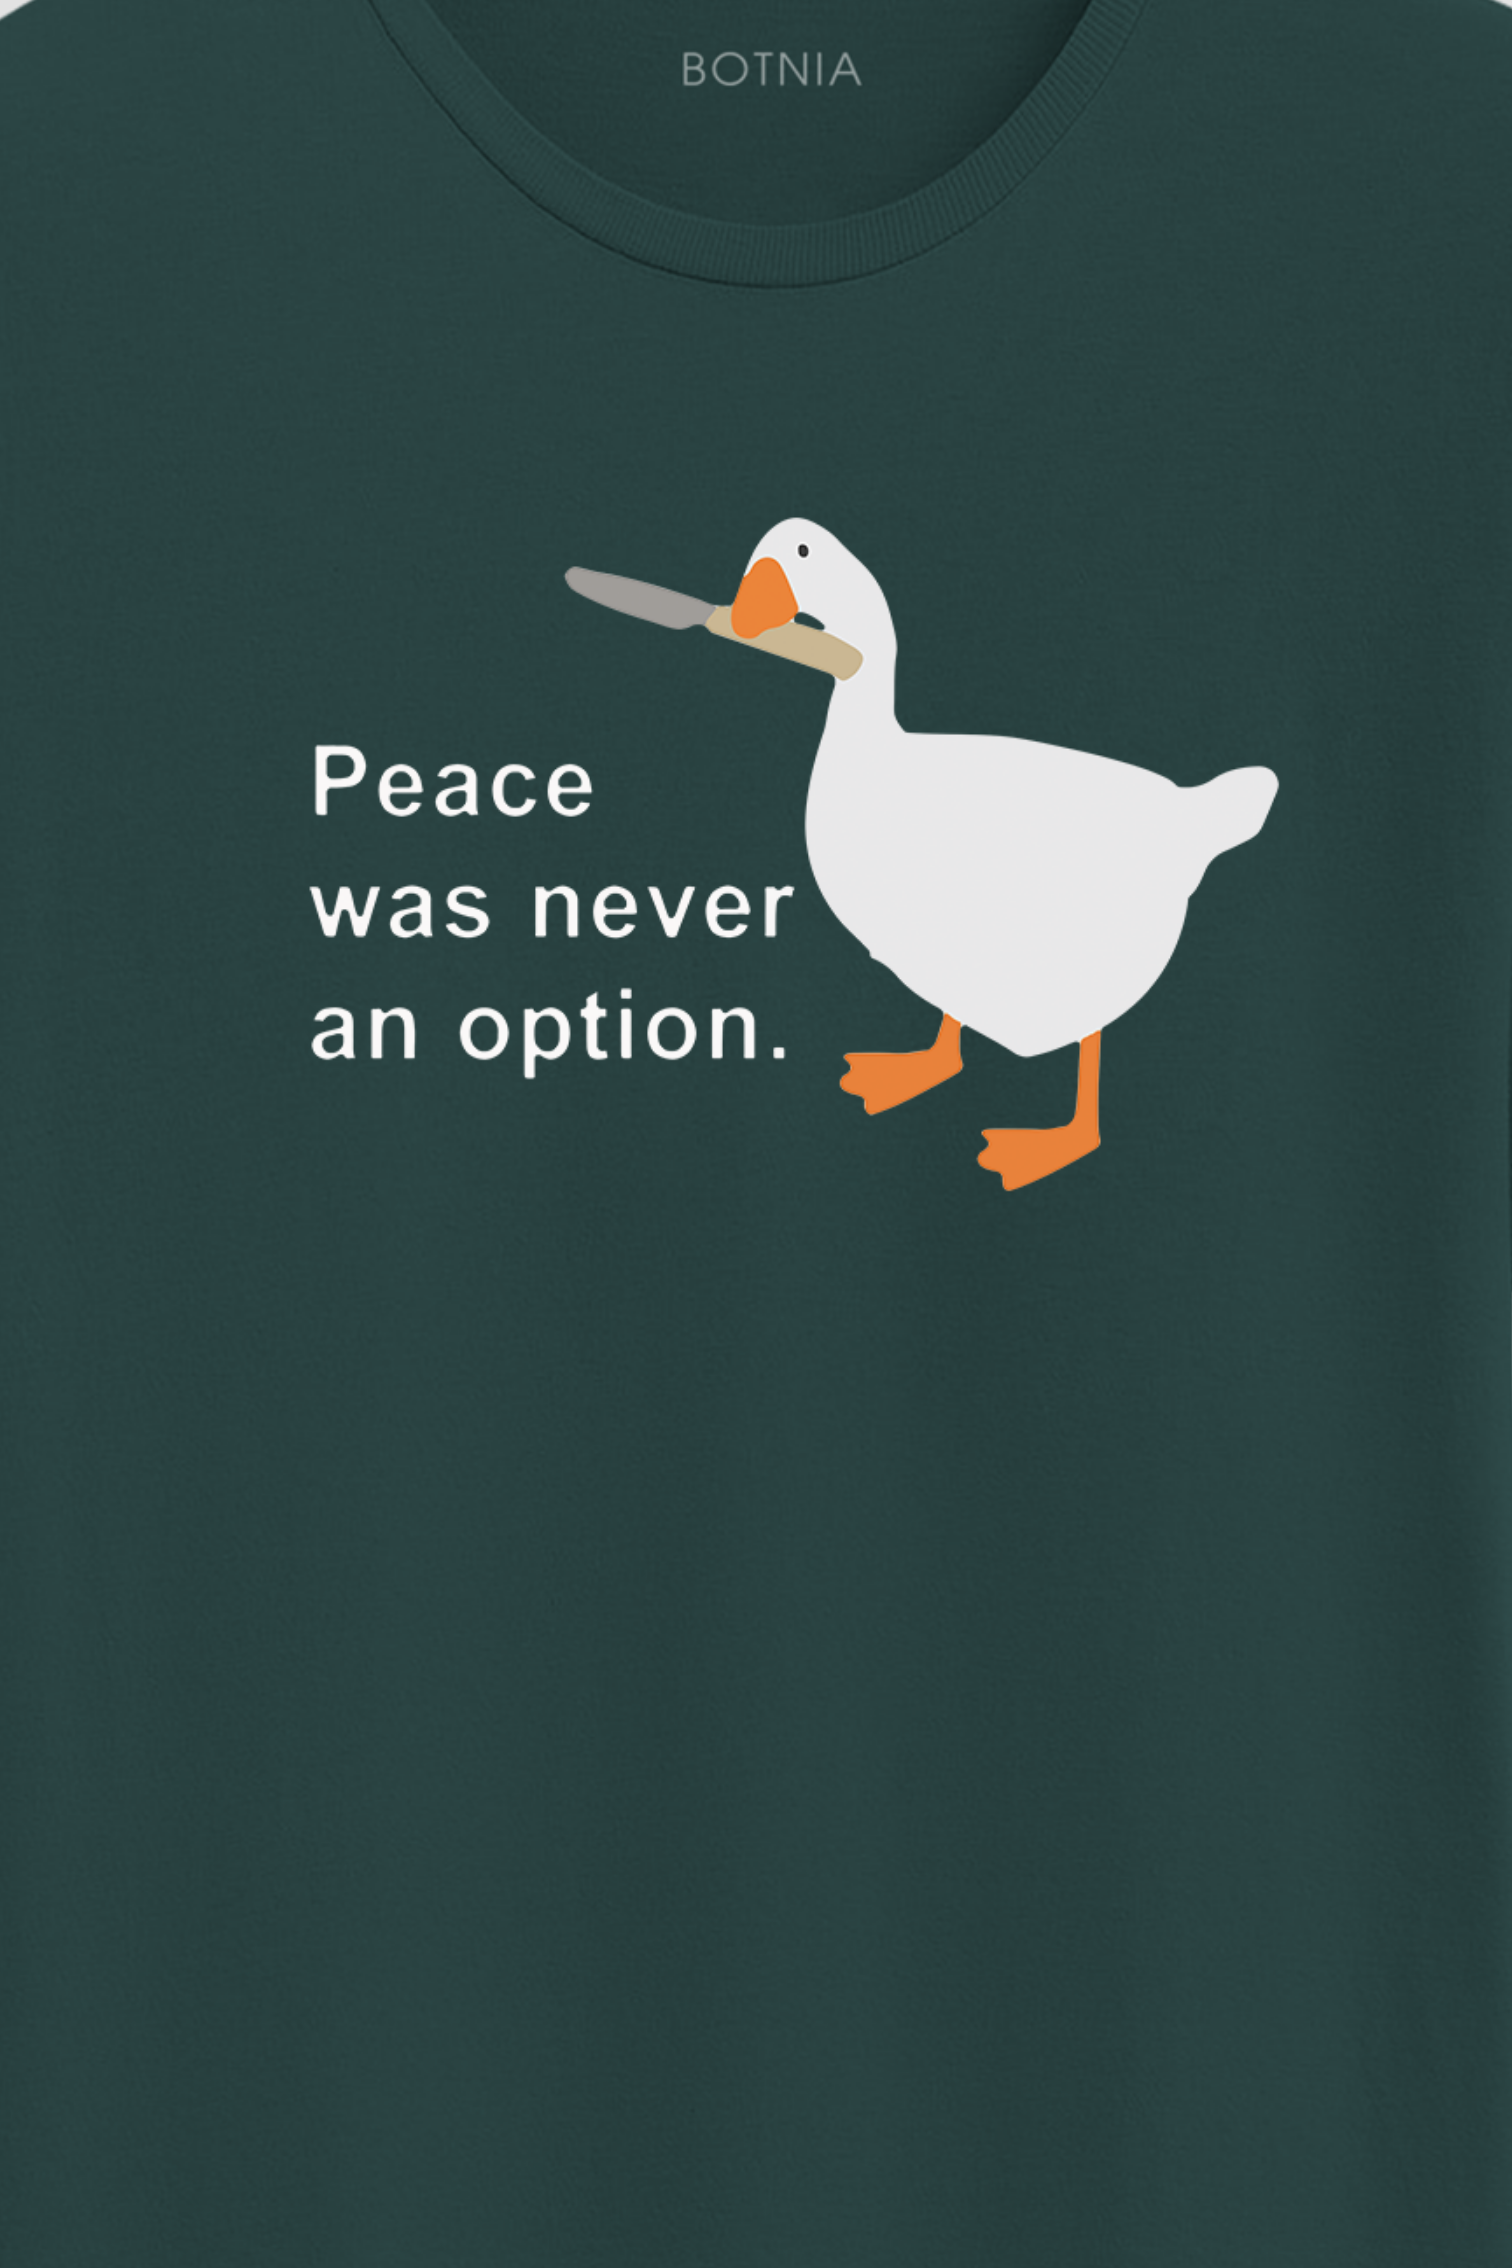 Peace- Half sleeve t-shirt